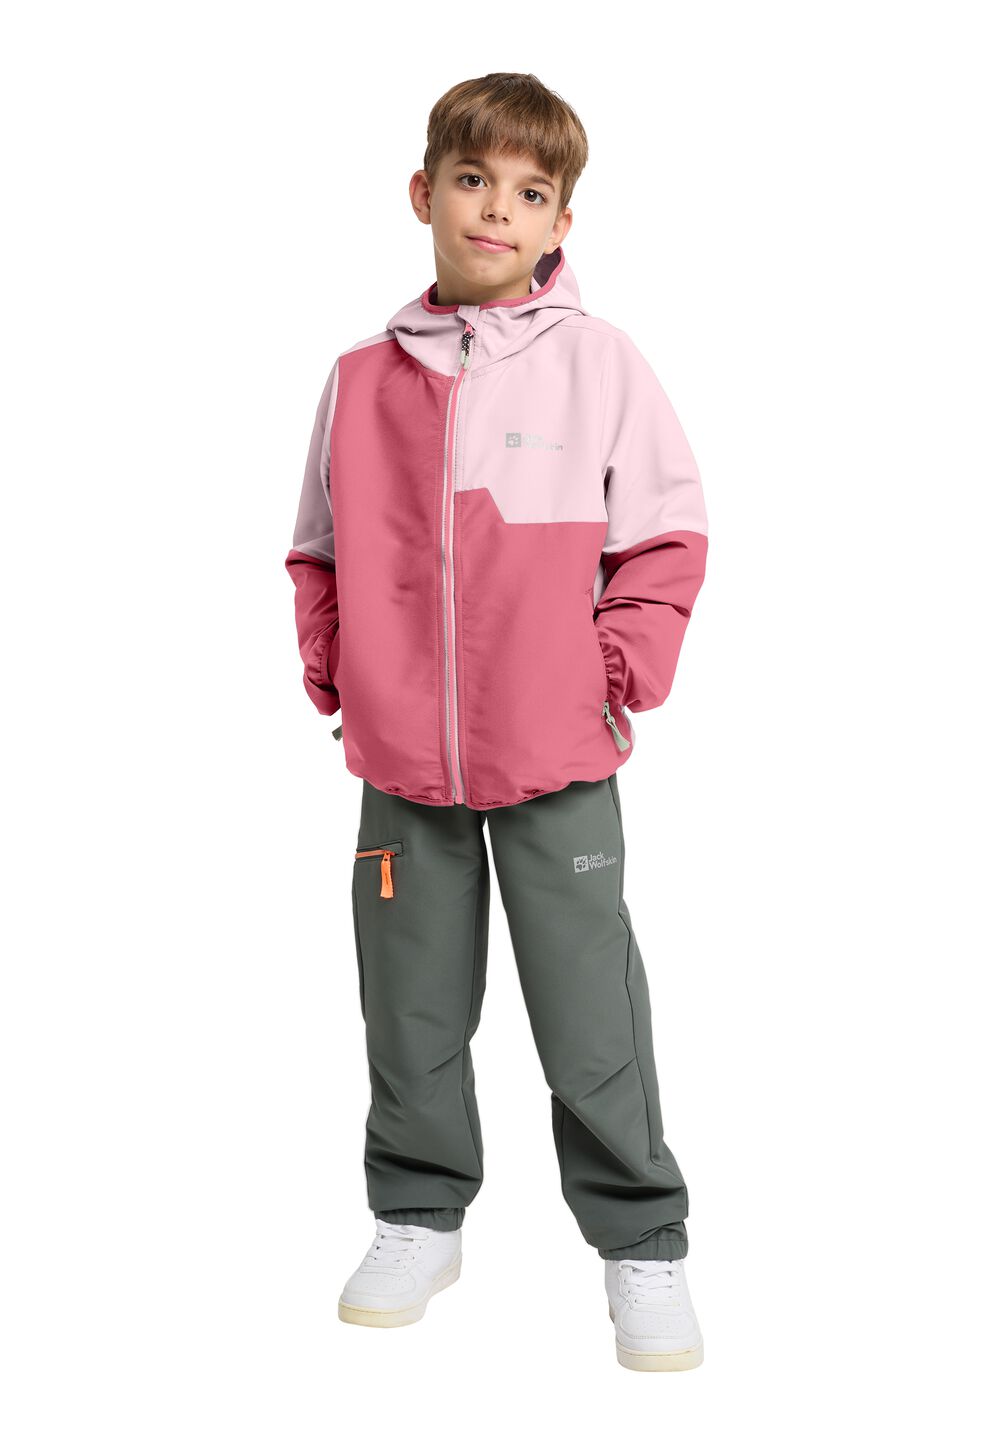 Jack Wolfskin Softshelljacke Kinder Turbulence Hooded Jacket Kids 140 soft pink soft pink von Jack Wolfskin